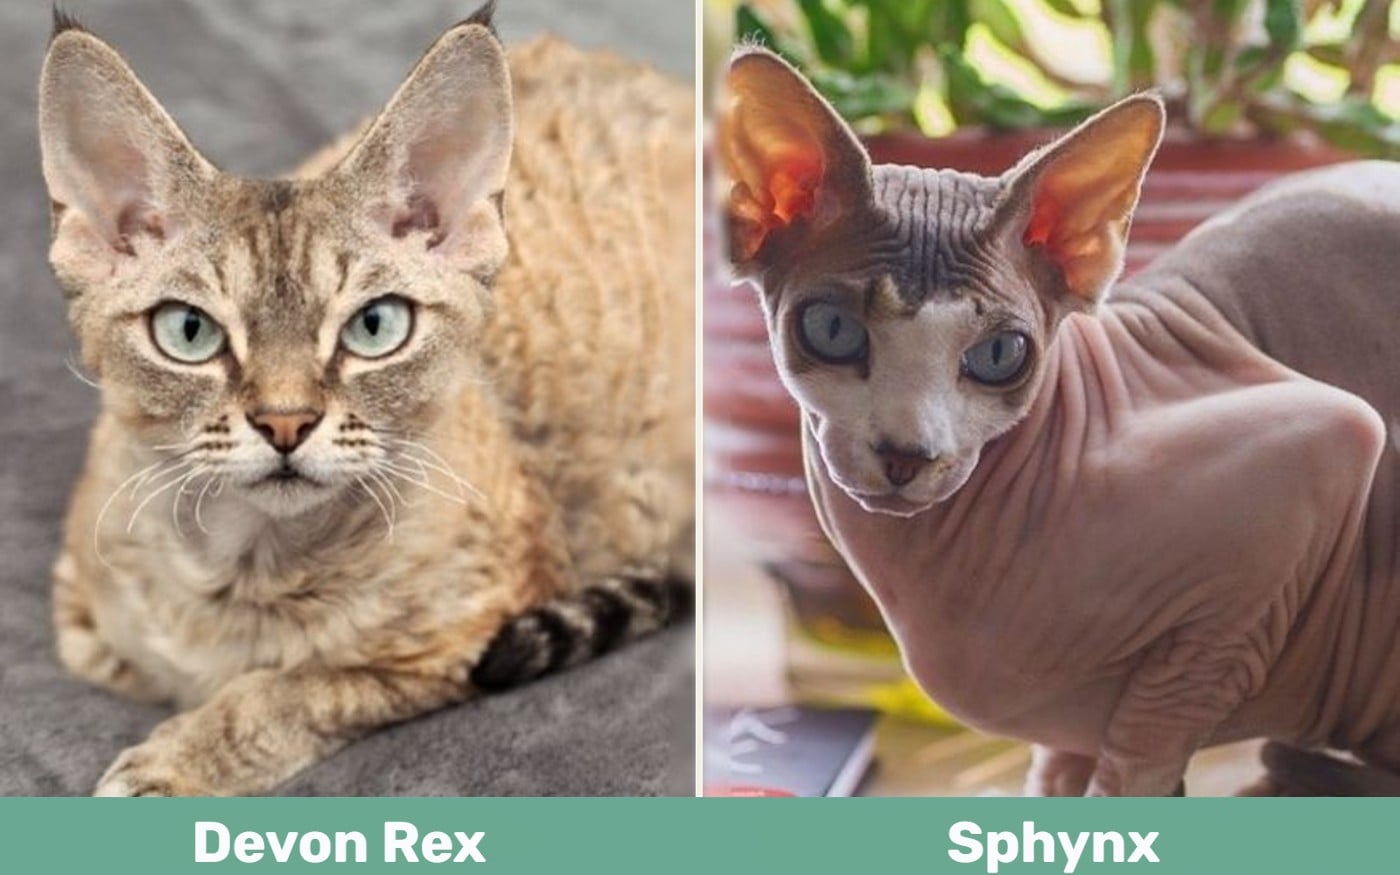 Devon Rex Cat vs Sphynx Cat